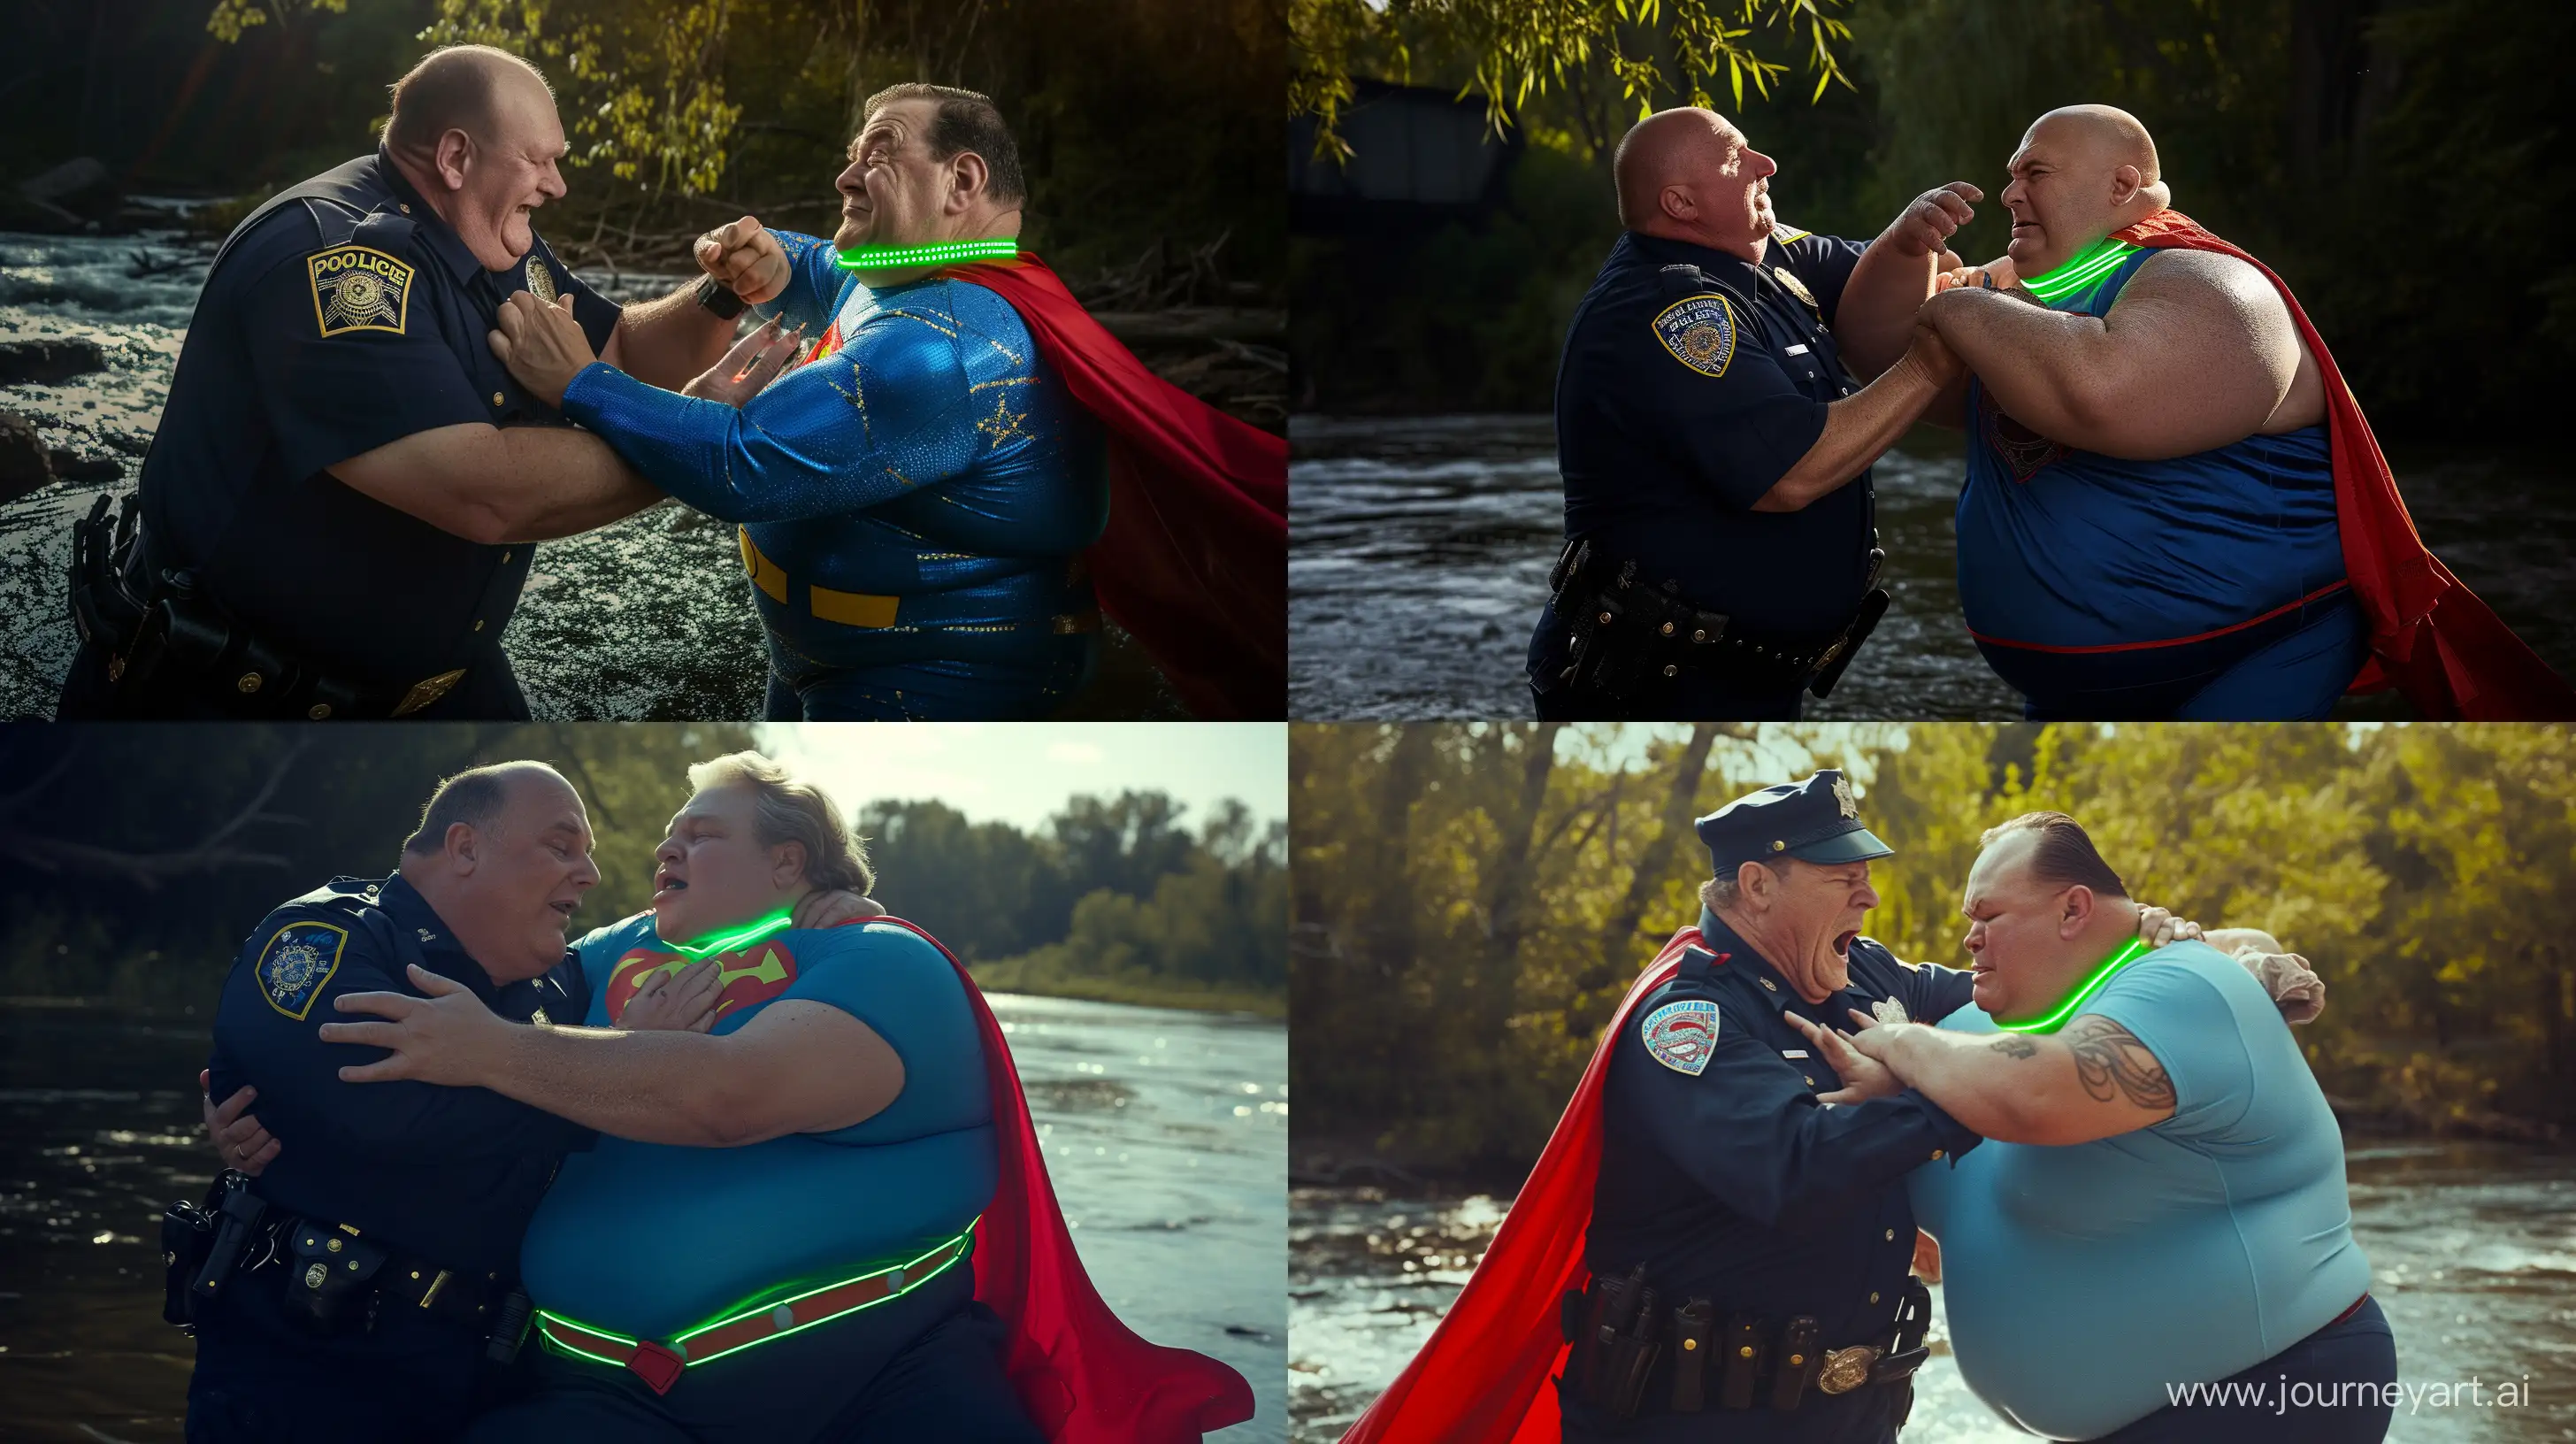 Epic-Showdown-Senior-Police-Officer-vs-Vintage-Superman-in-Riverside-Battle